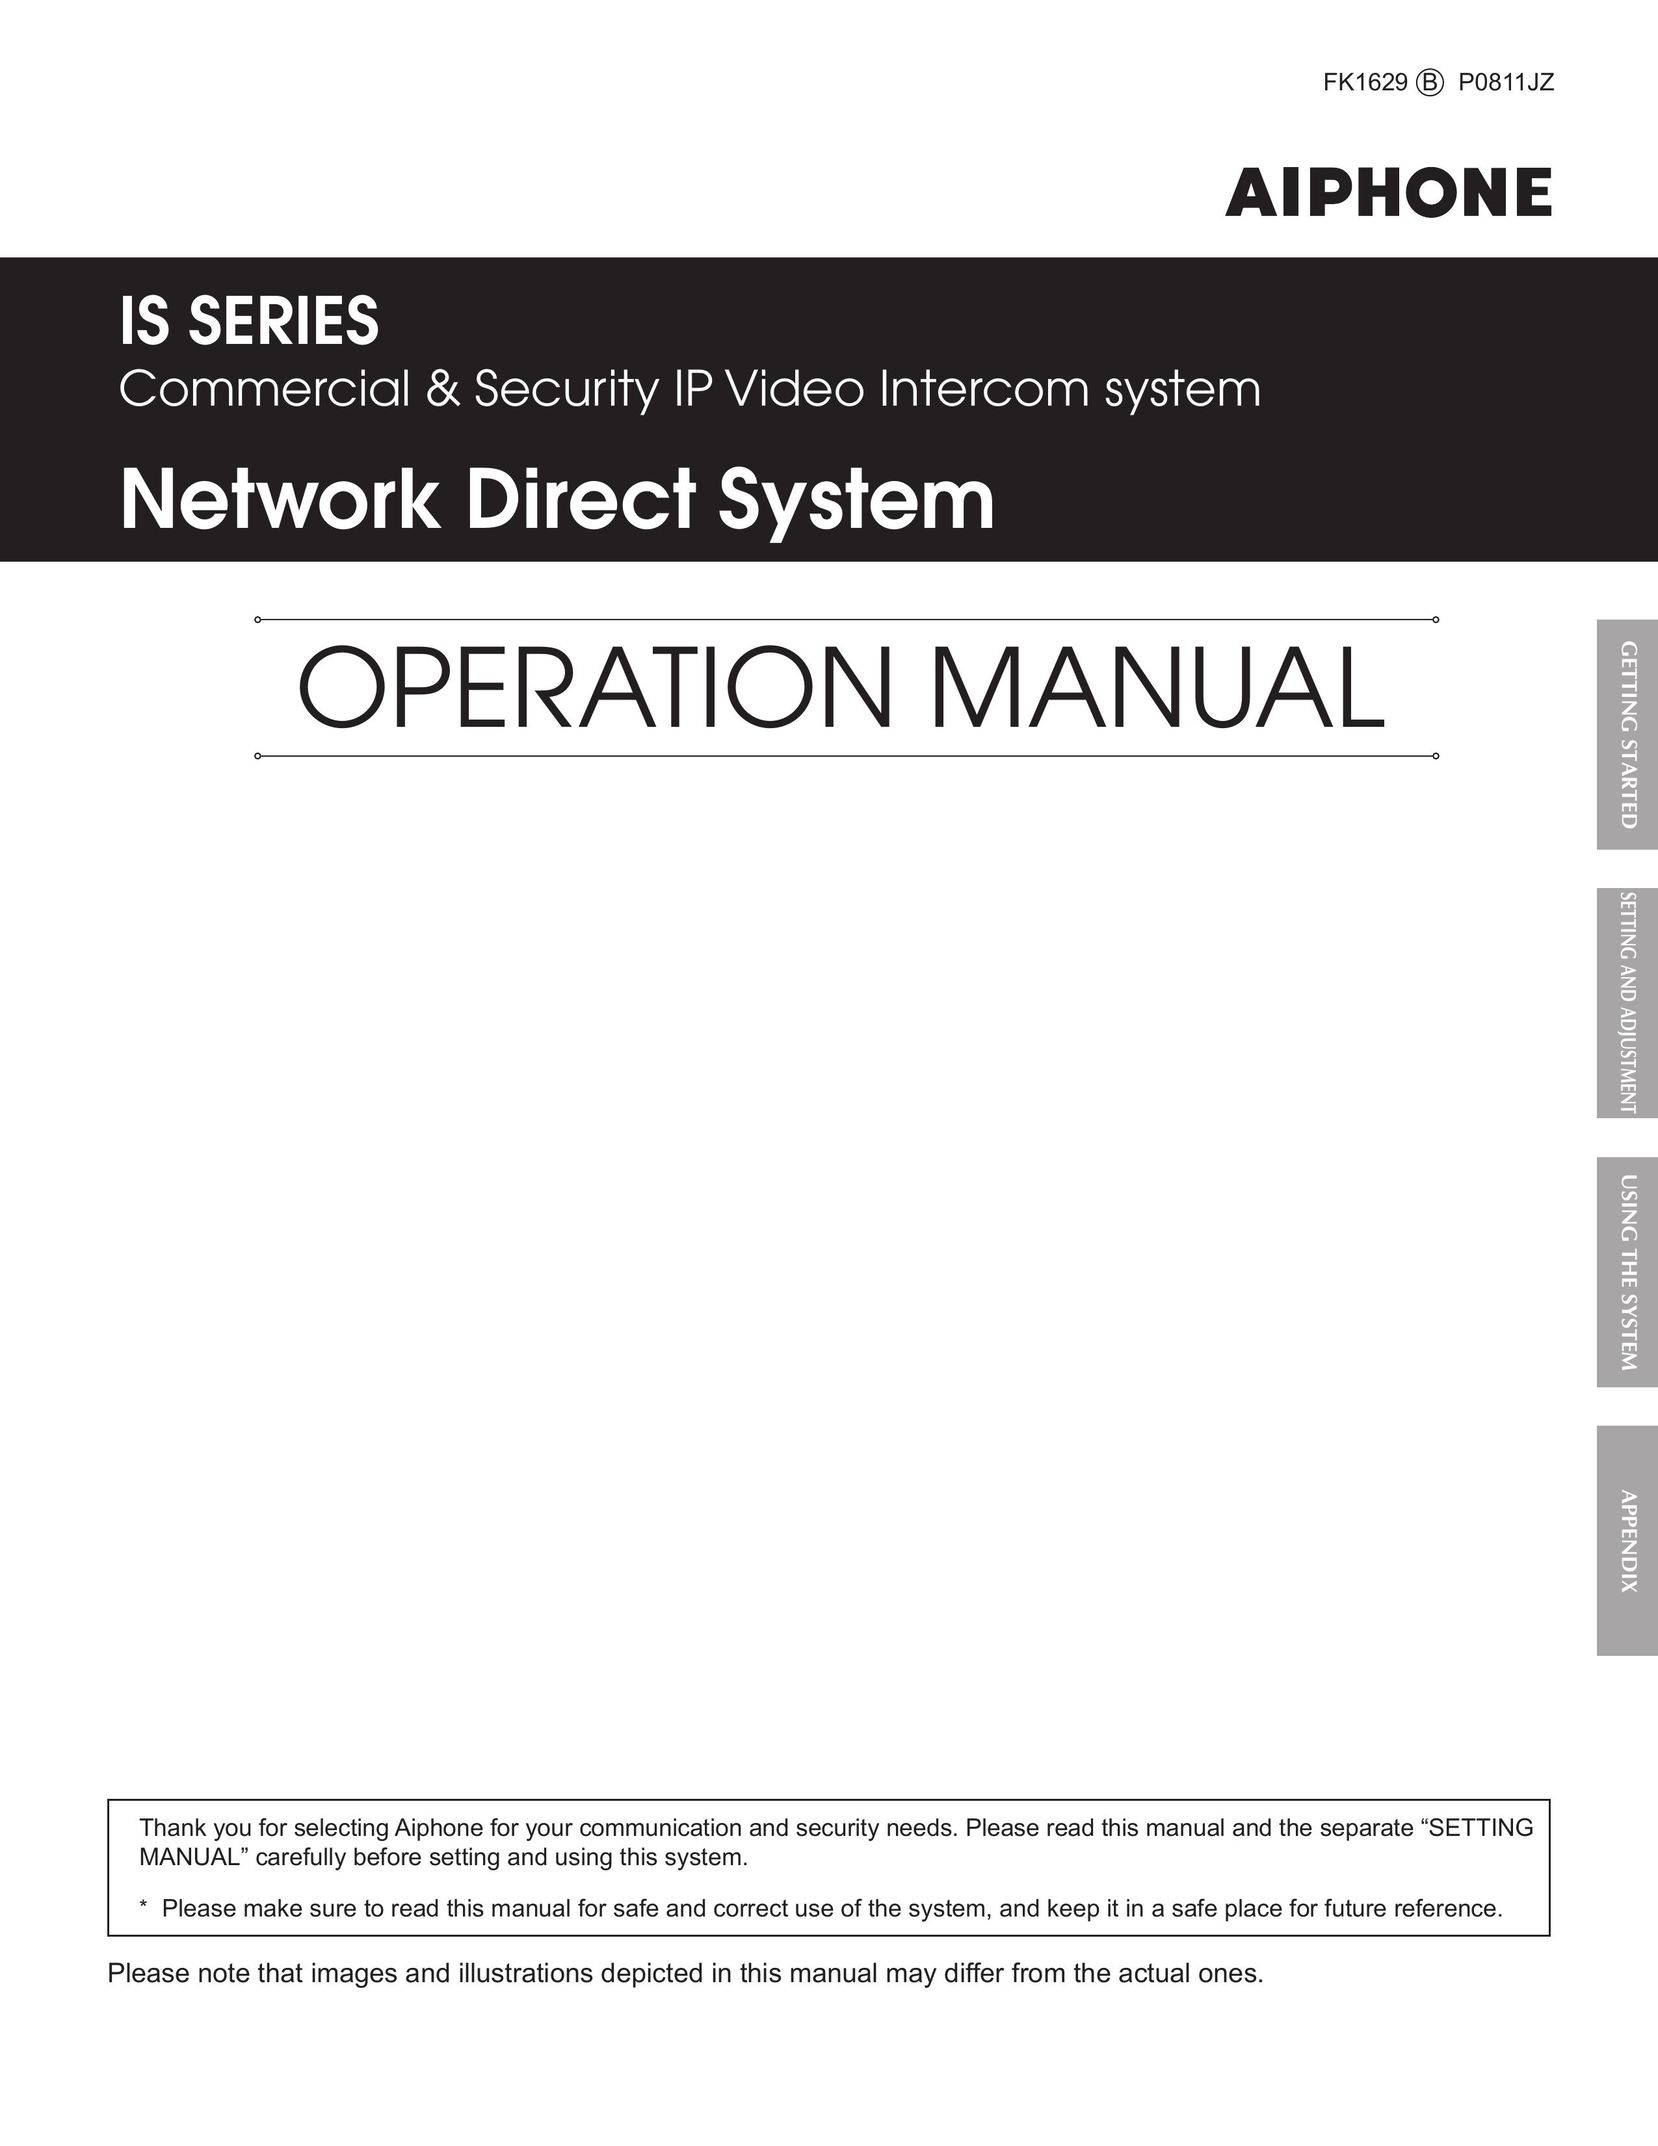 Aiphone FK1629 Intercom System User Manual